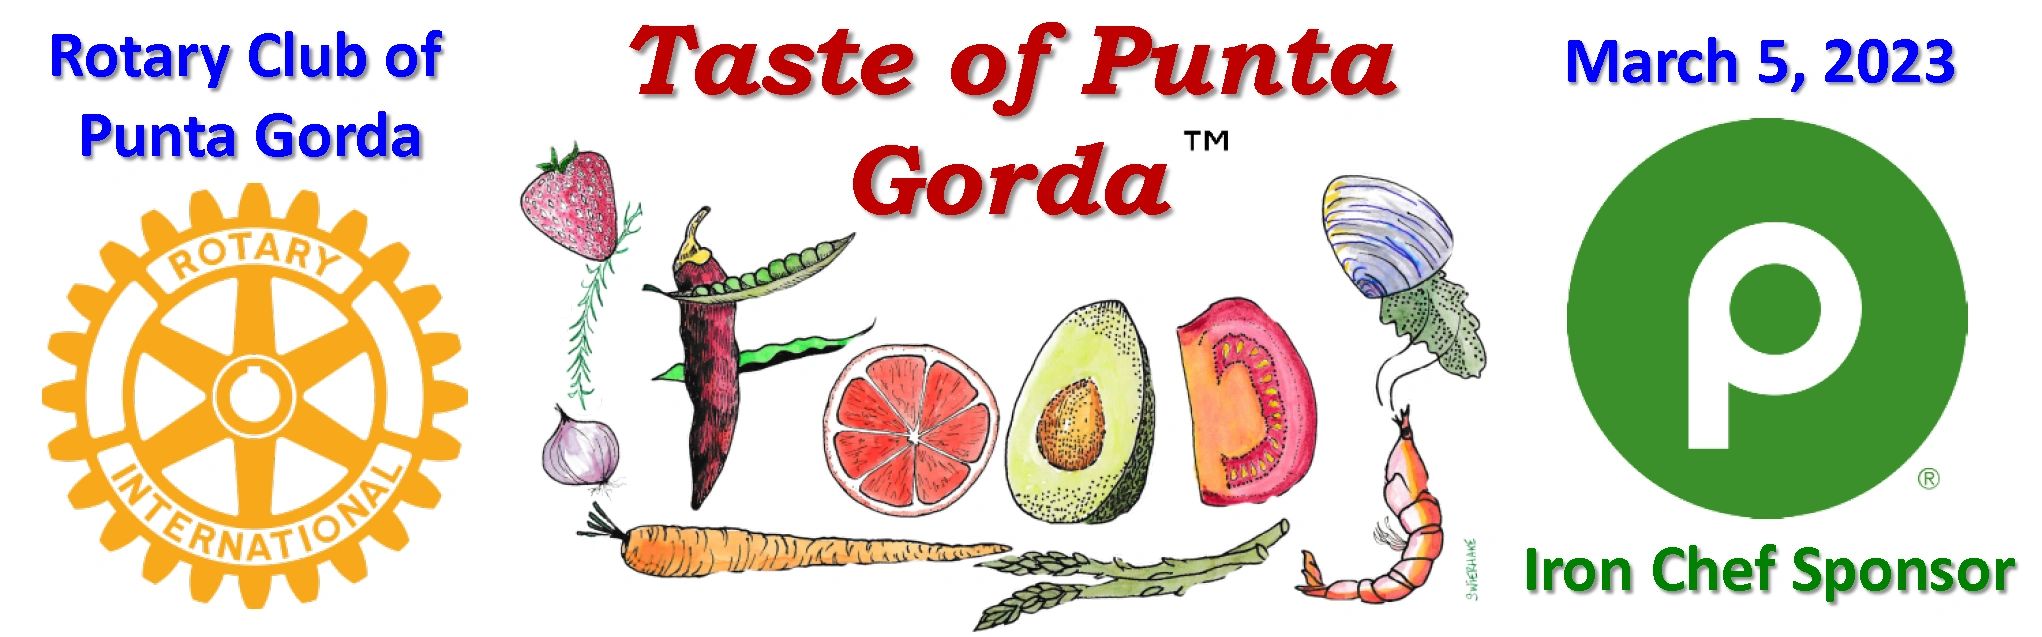 Taste of Punta Gorda and Beyond Food Festival, Restaurant Tastes